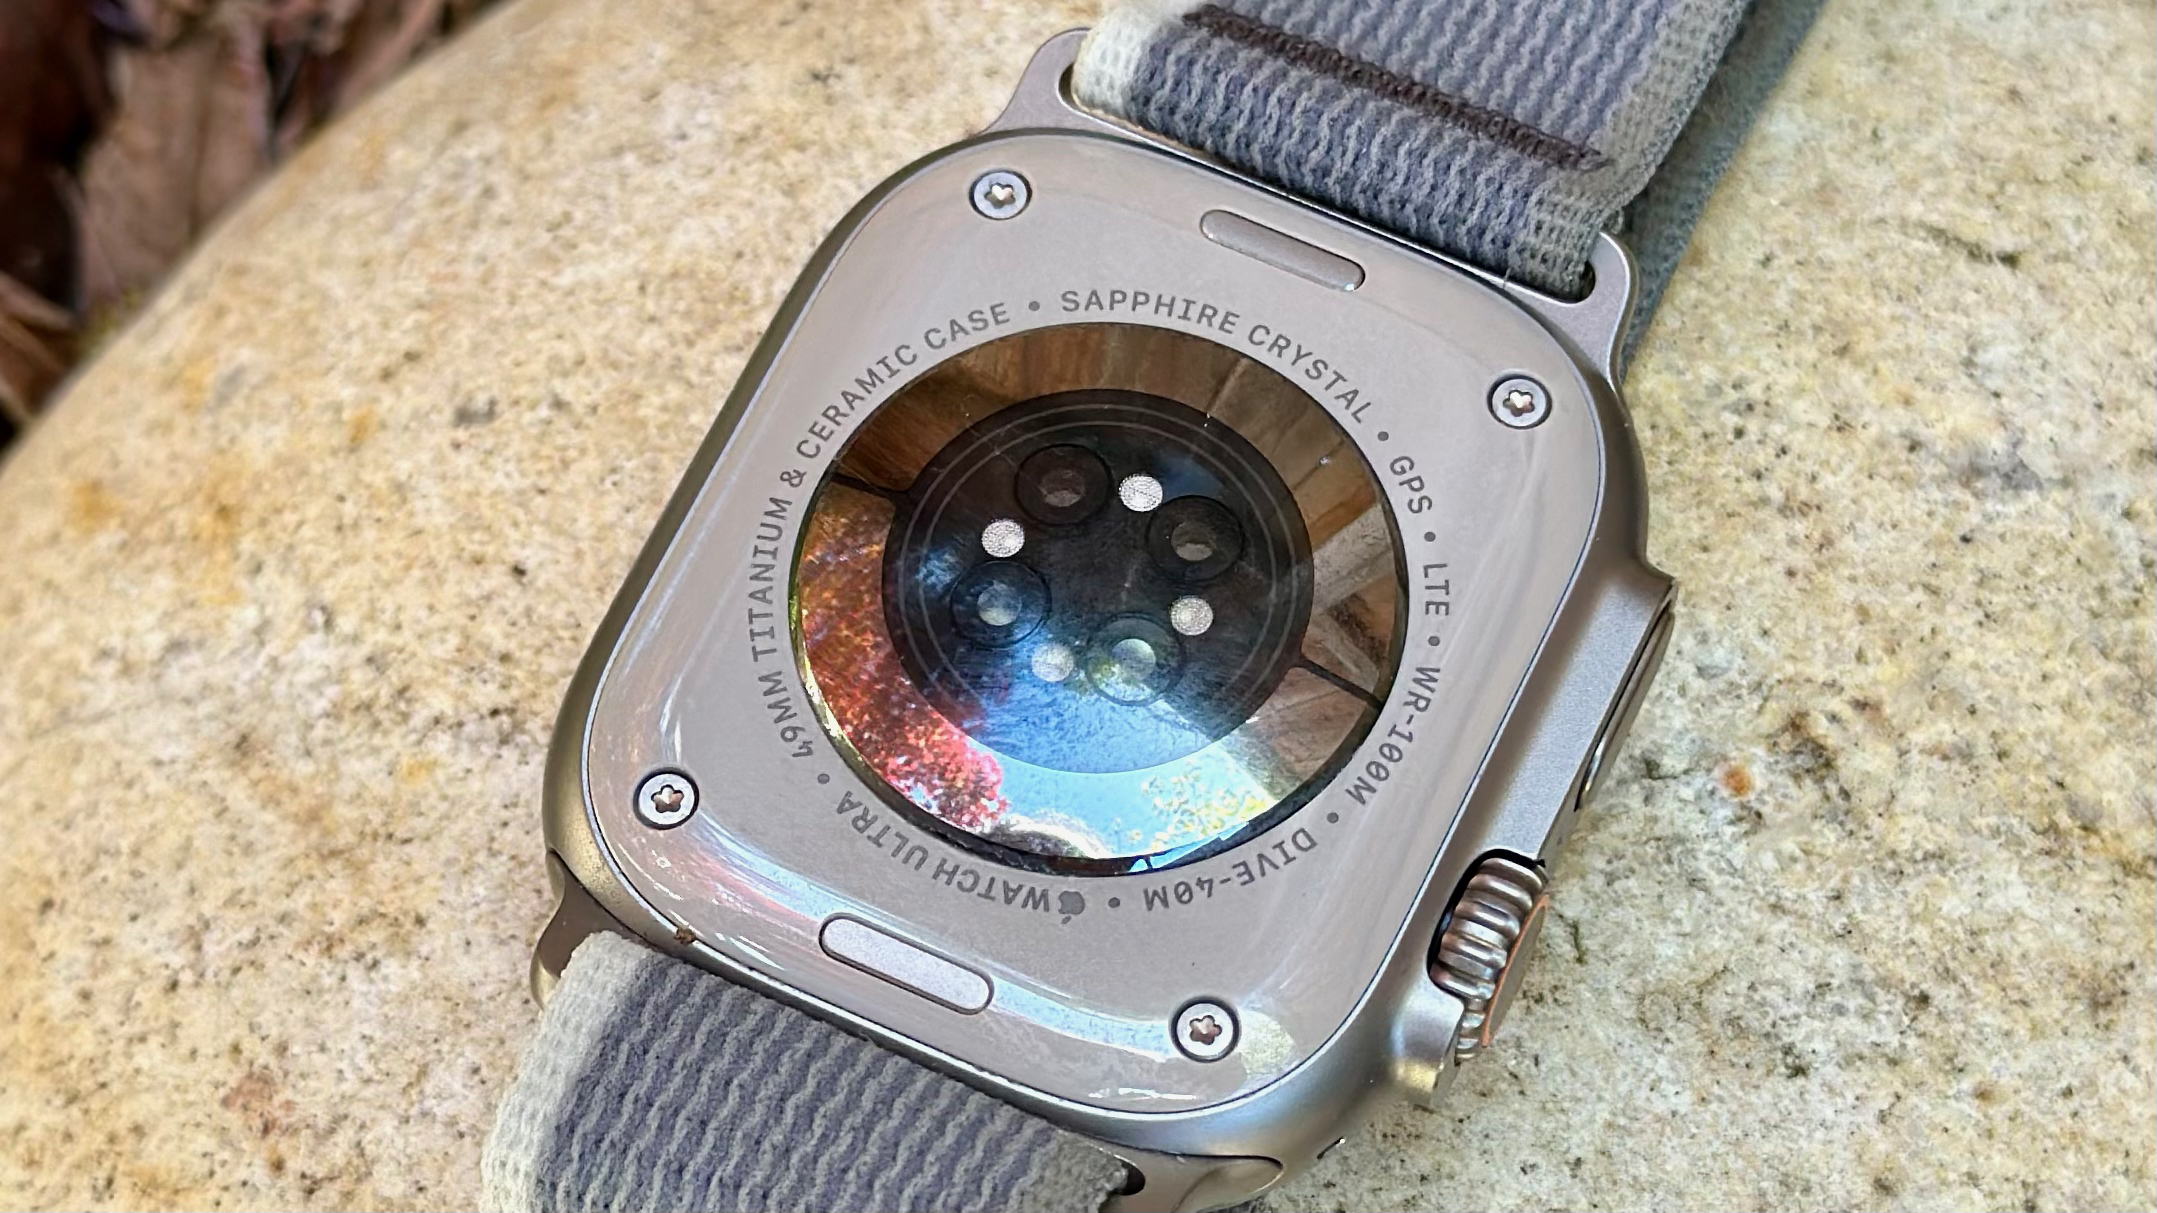 The bottom sensor array of the Apple Watch Ultra 2